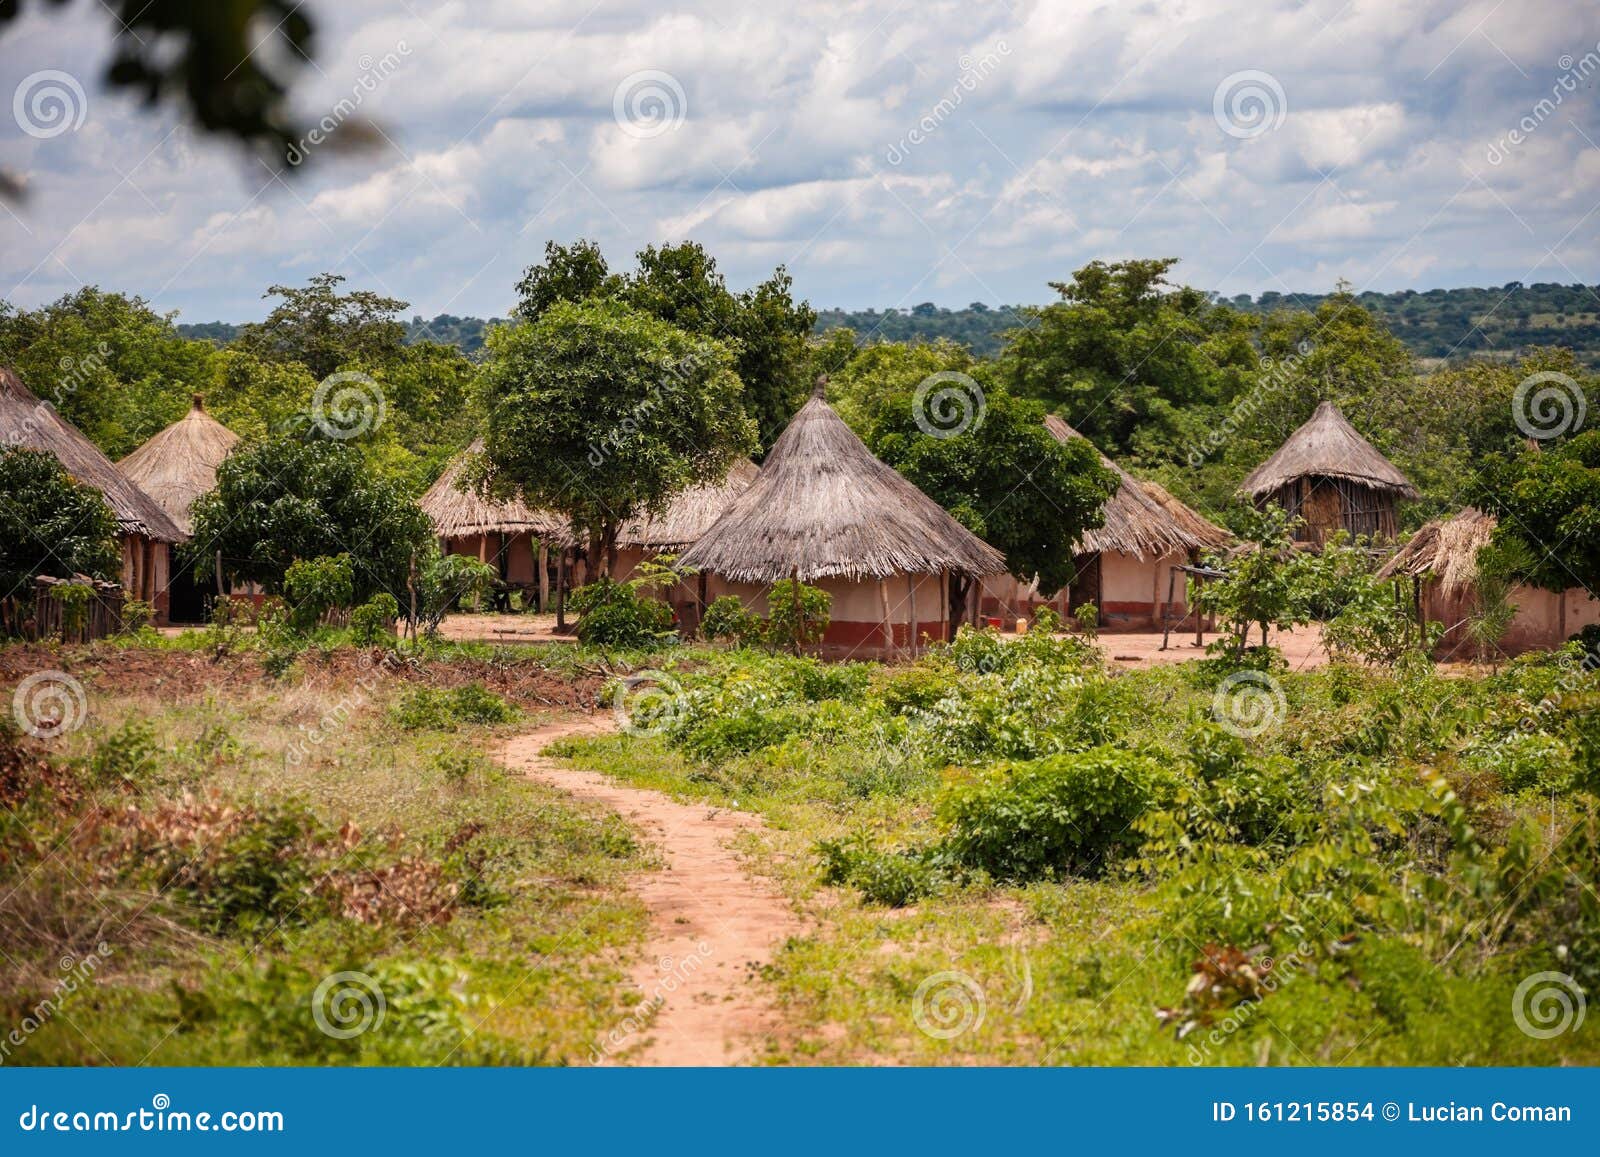 village africain